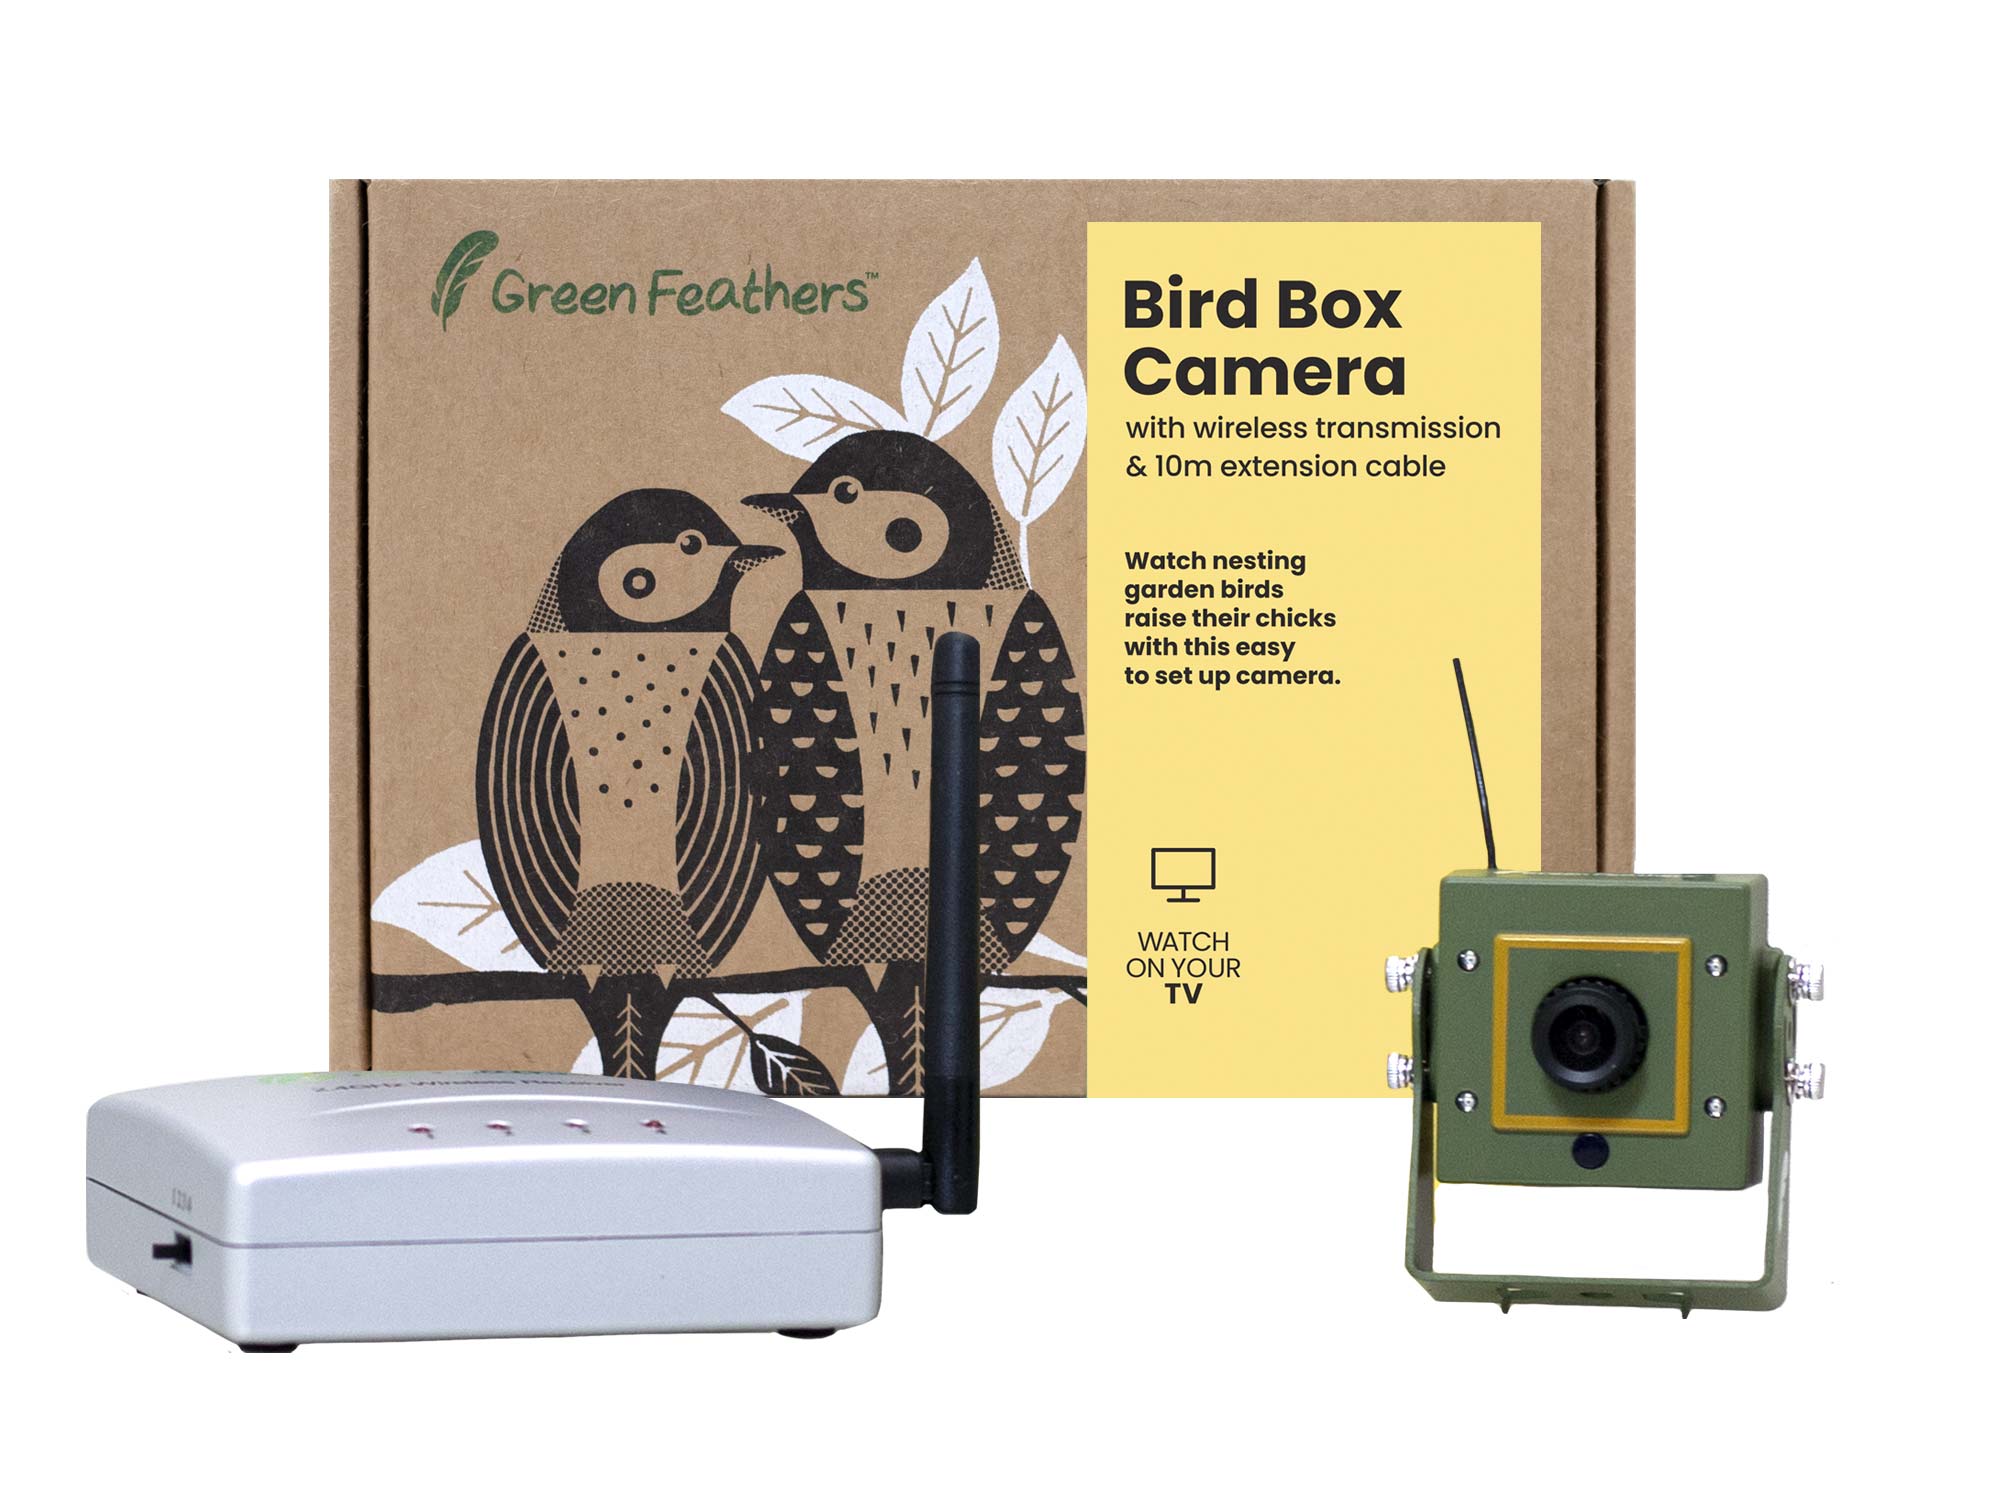 DIY Bird Box Camera Kit - Build Nest Box With Camera